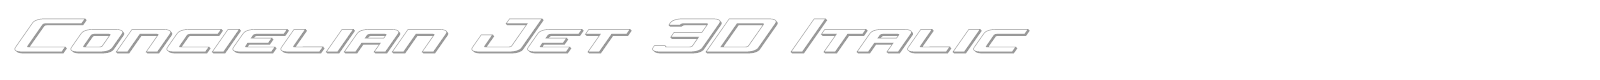 Font Concielian Jet Semi-Italic